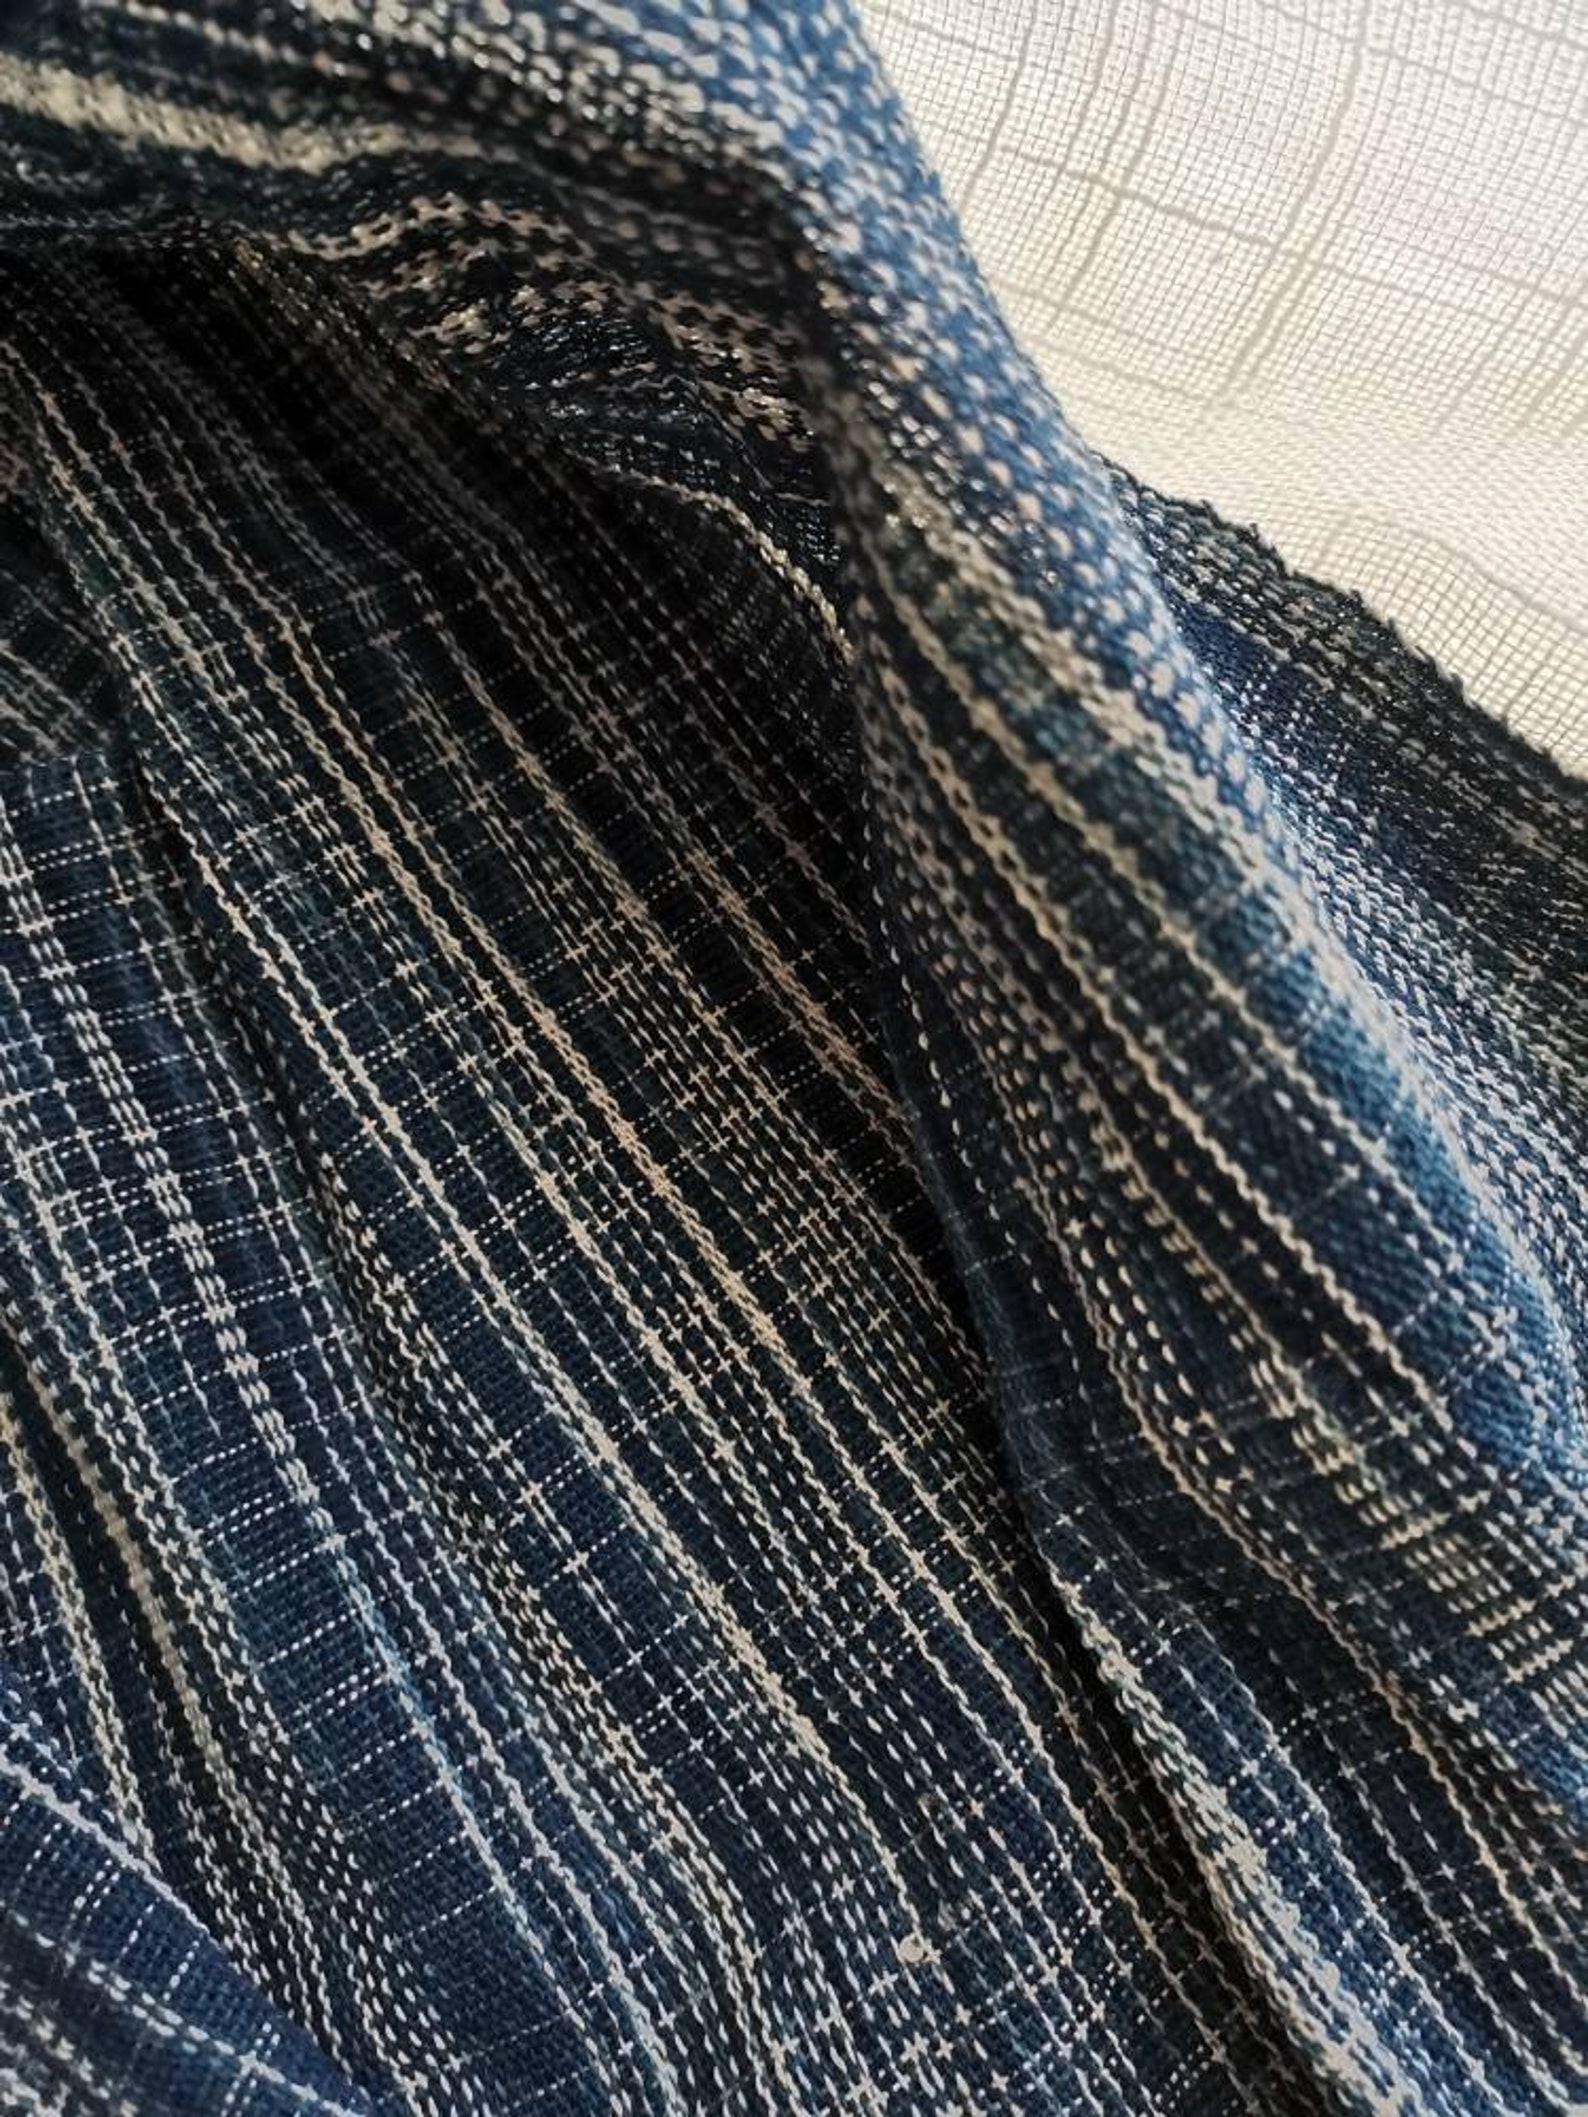 Ancient loom woven fabric indigo blue dye yarn natural plant | Etsy